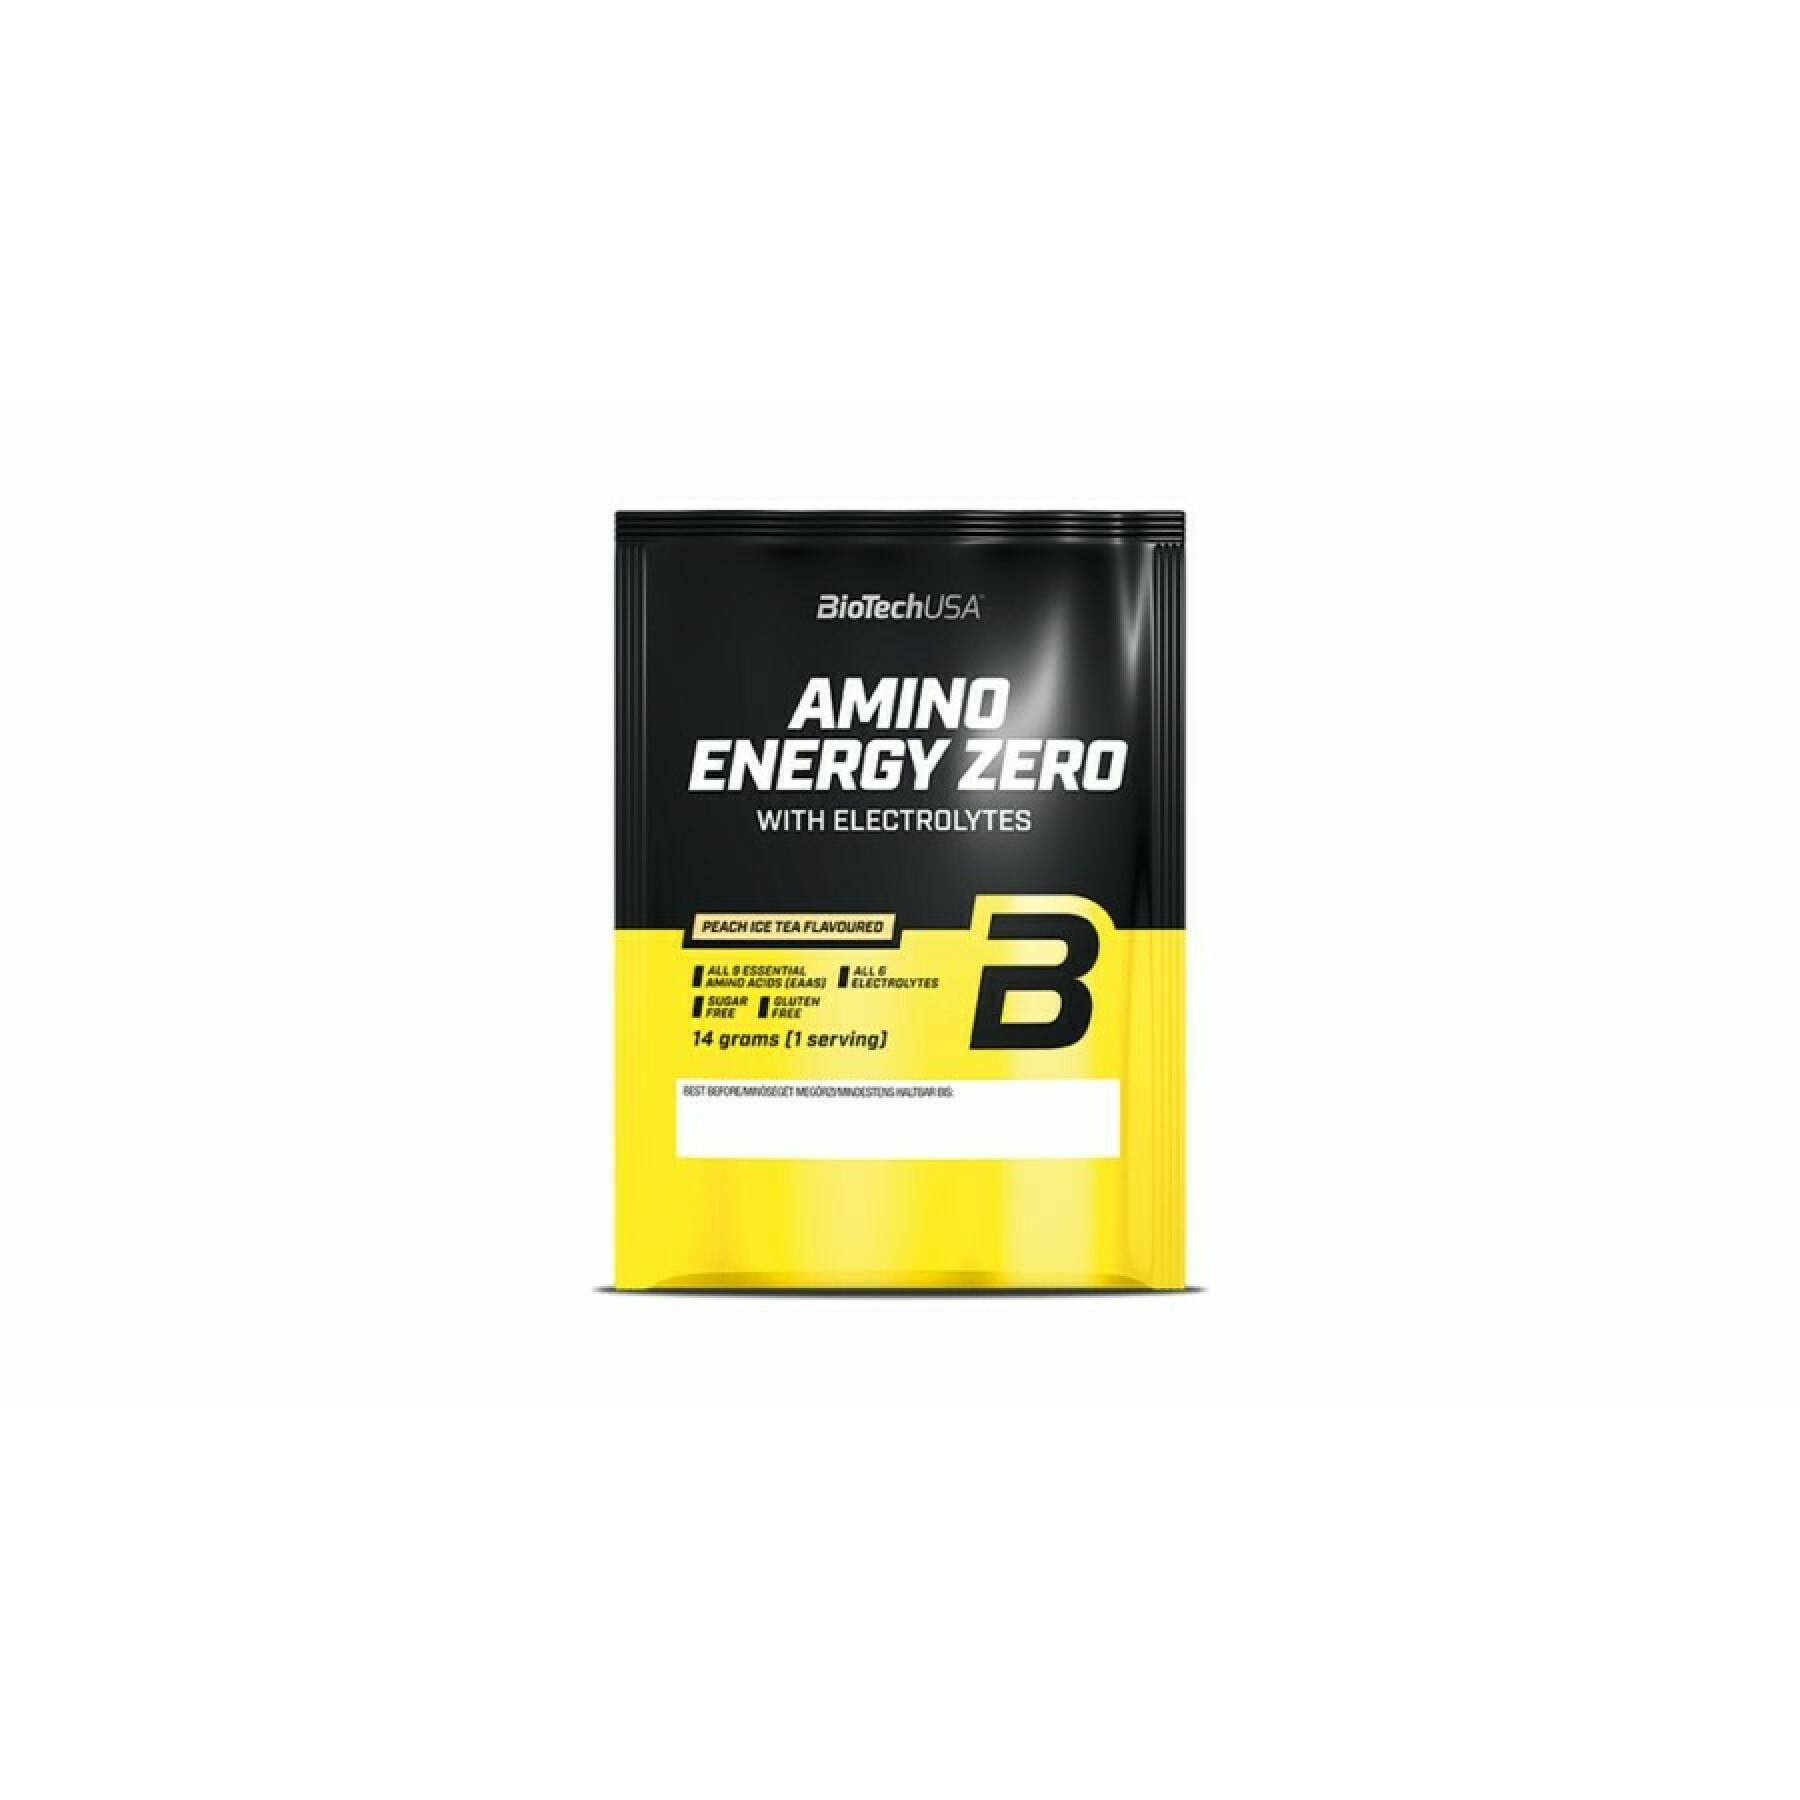 50er Pack Aminosäurebeutel mit Elektrolyten Biotech USA amino energy zero - Thé glacé aux pêches - 14g